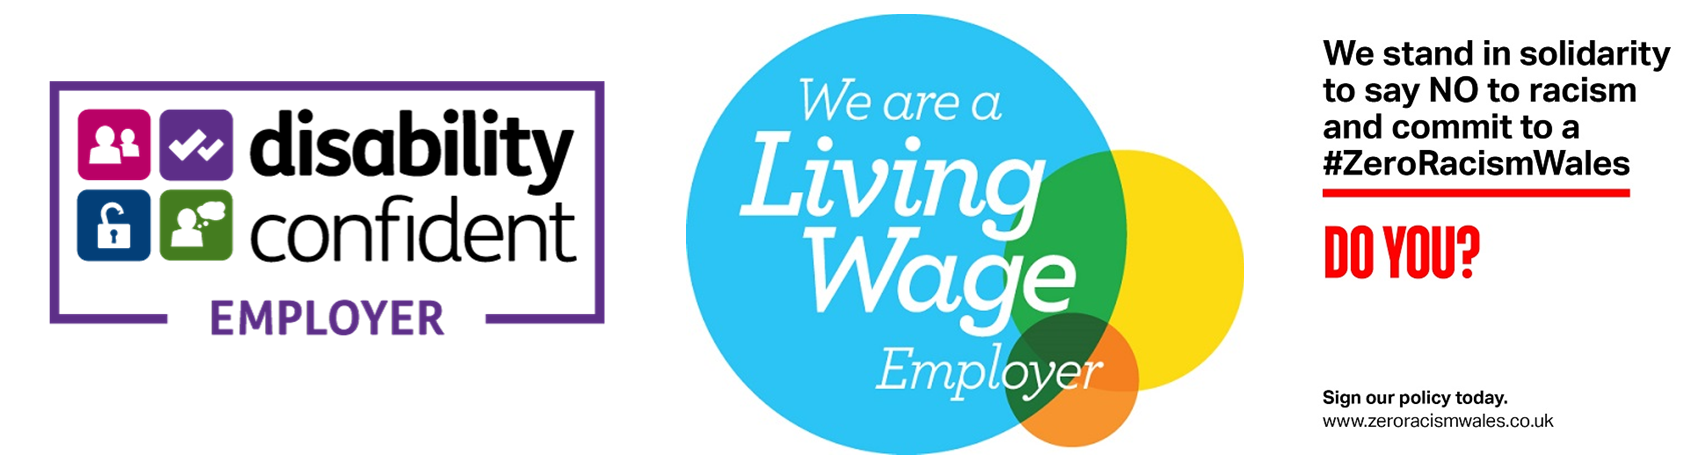 disability confident employer logo / living wage employer logo / anti-racism logo